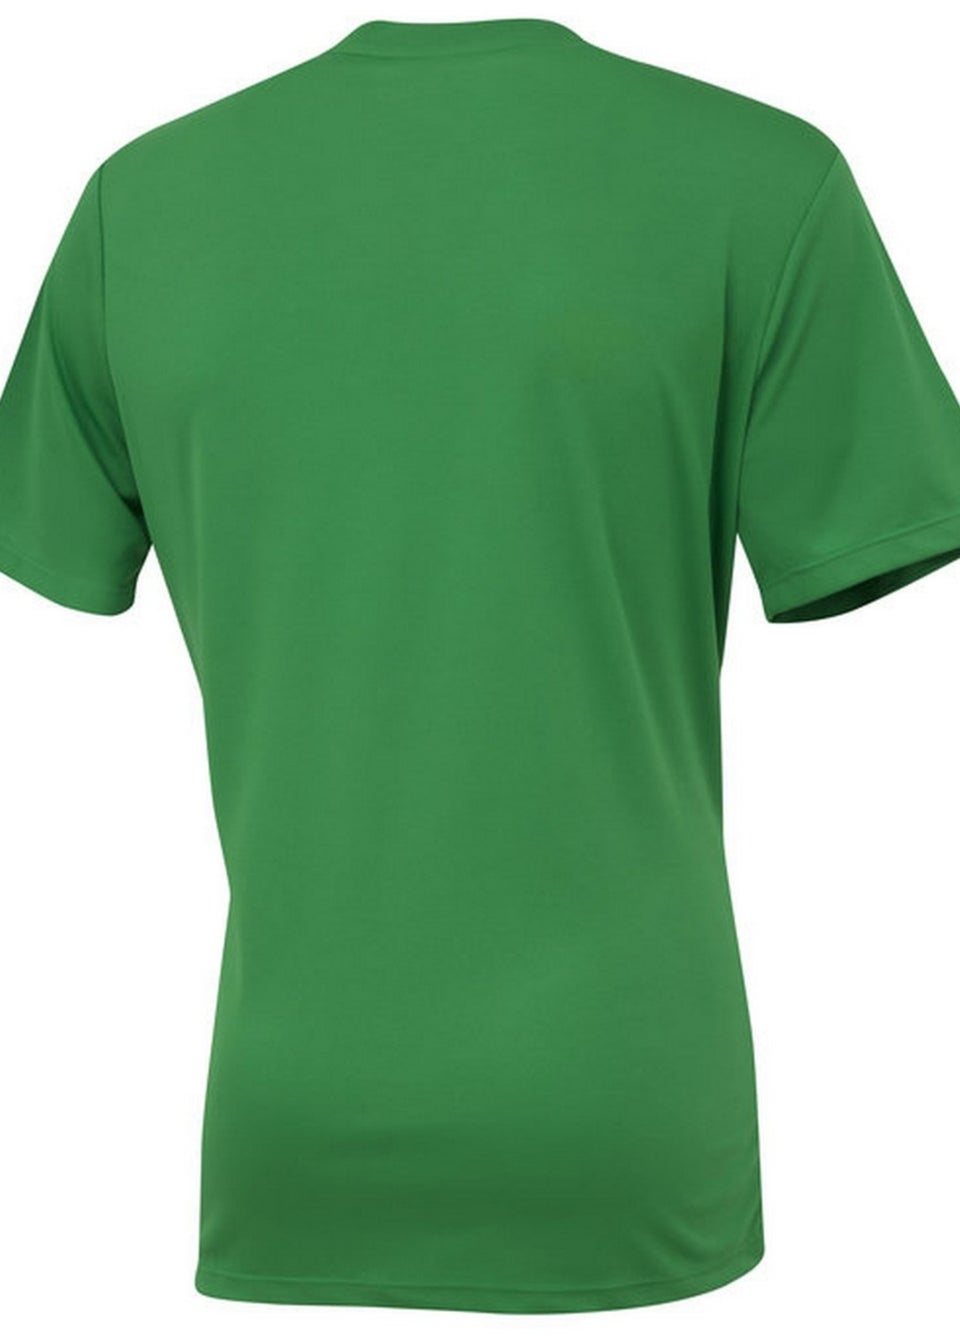 Umbro Emerald Club Short-Sleeved Jersey